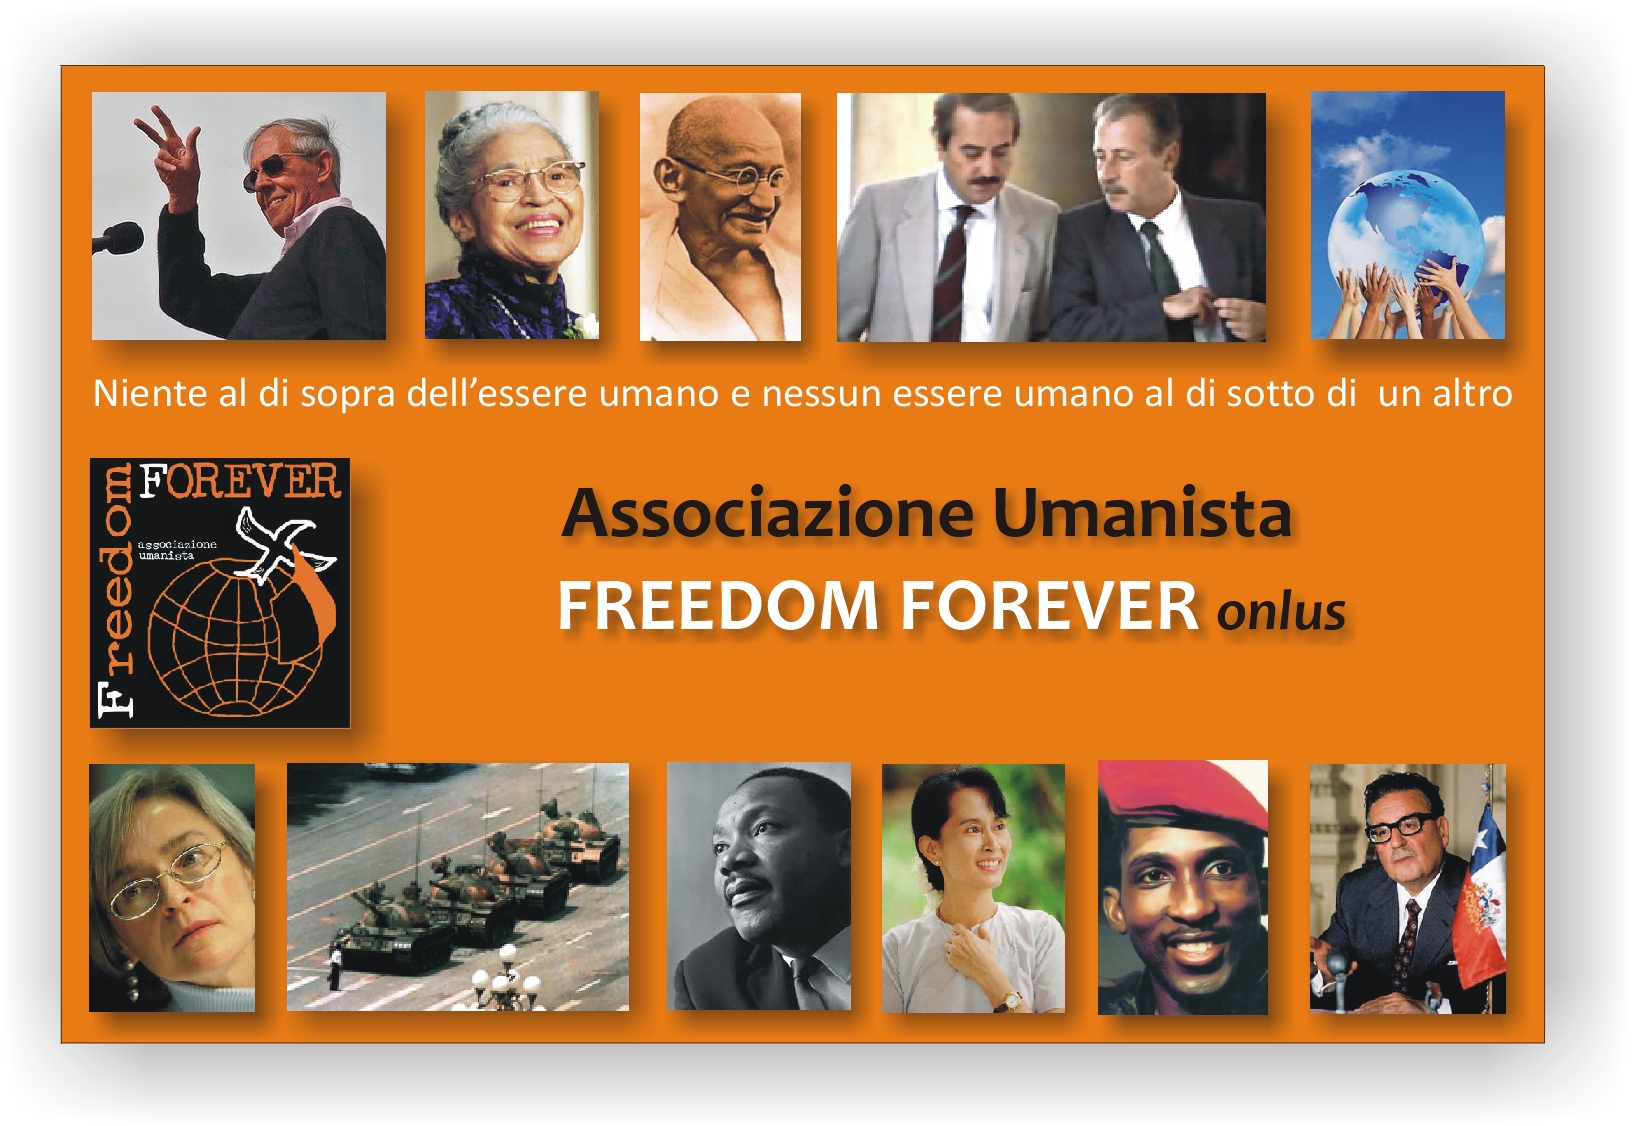 Associazione Umanista Freedom Forever